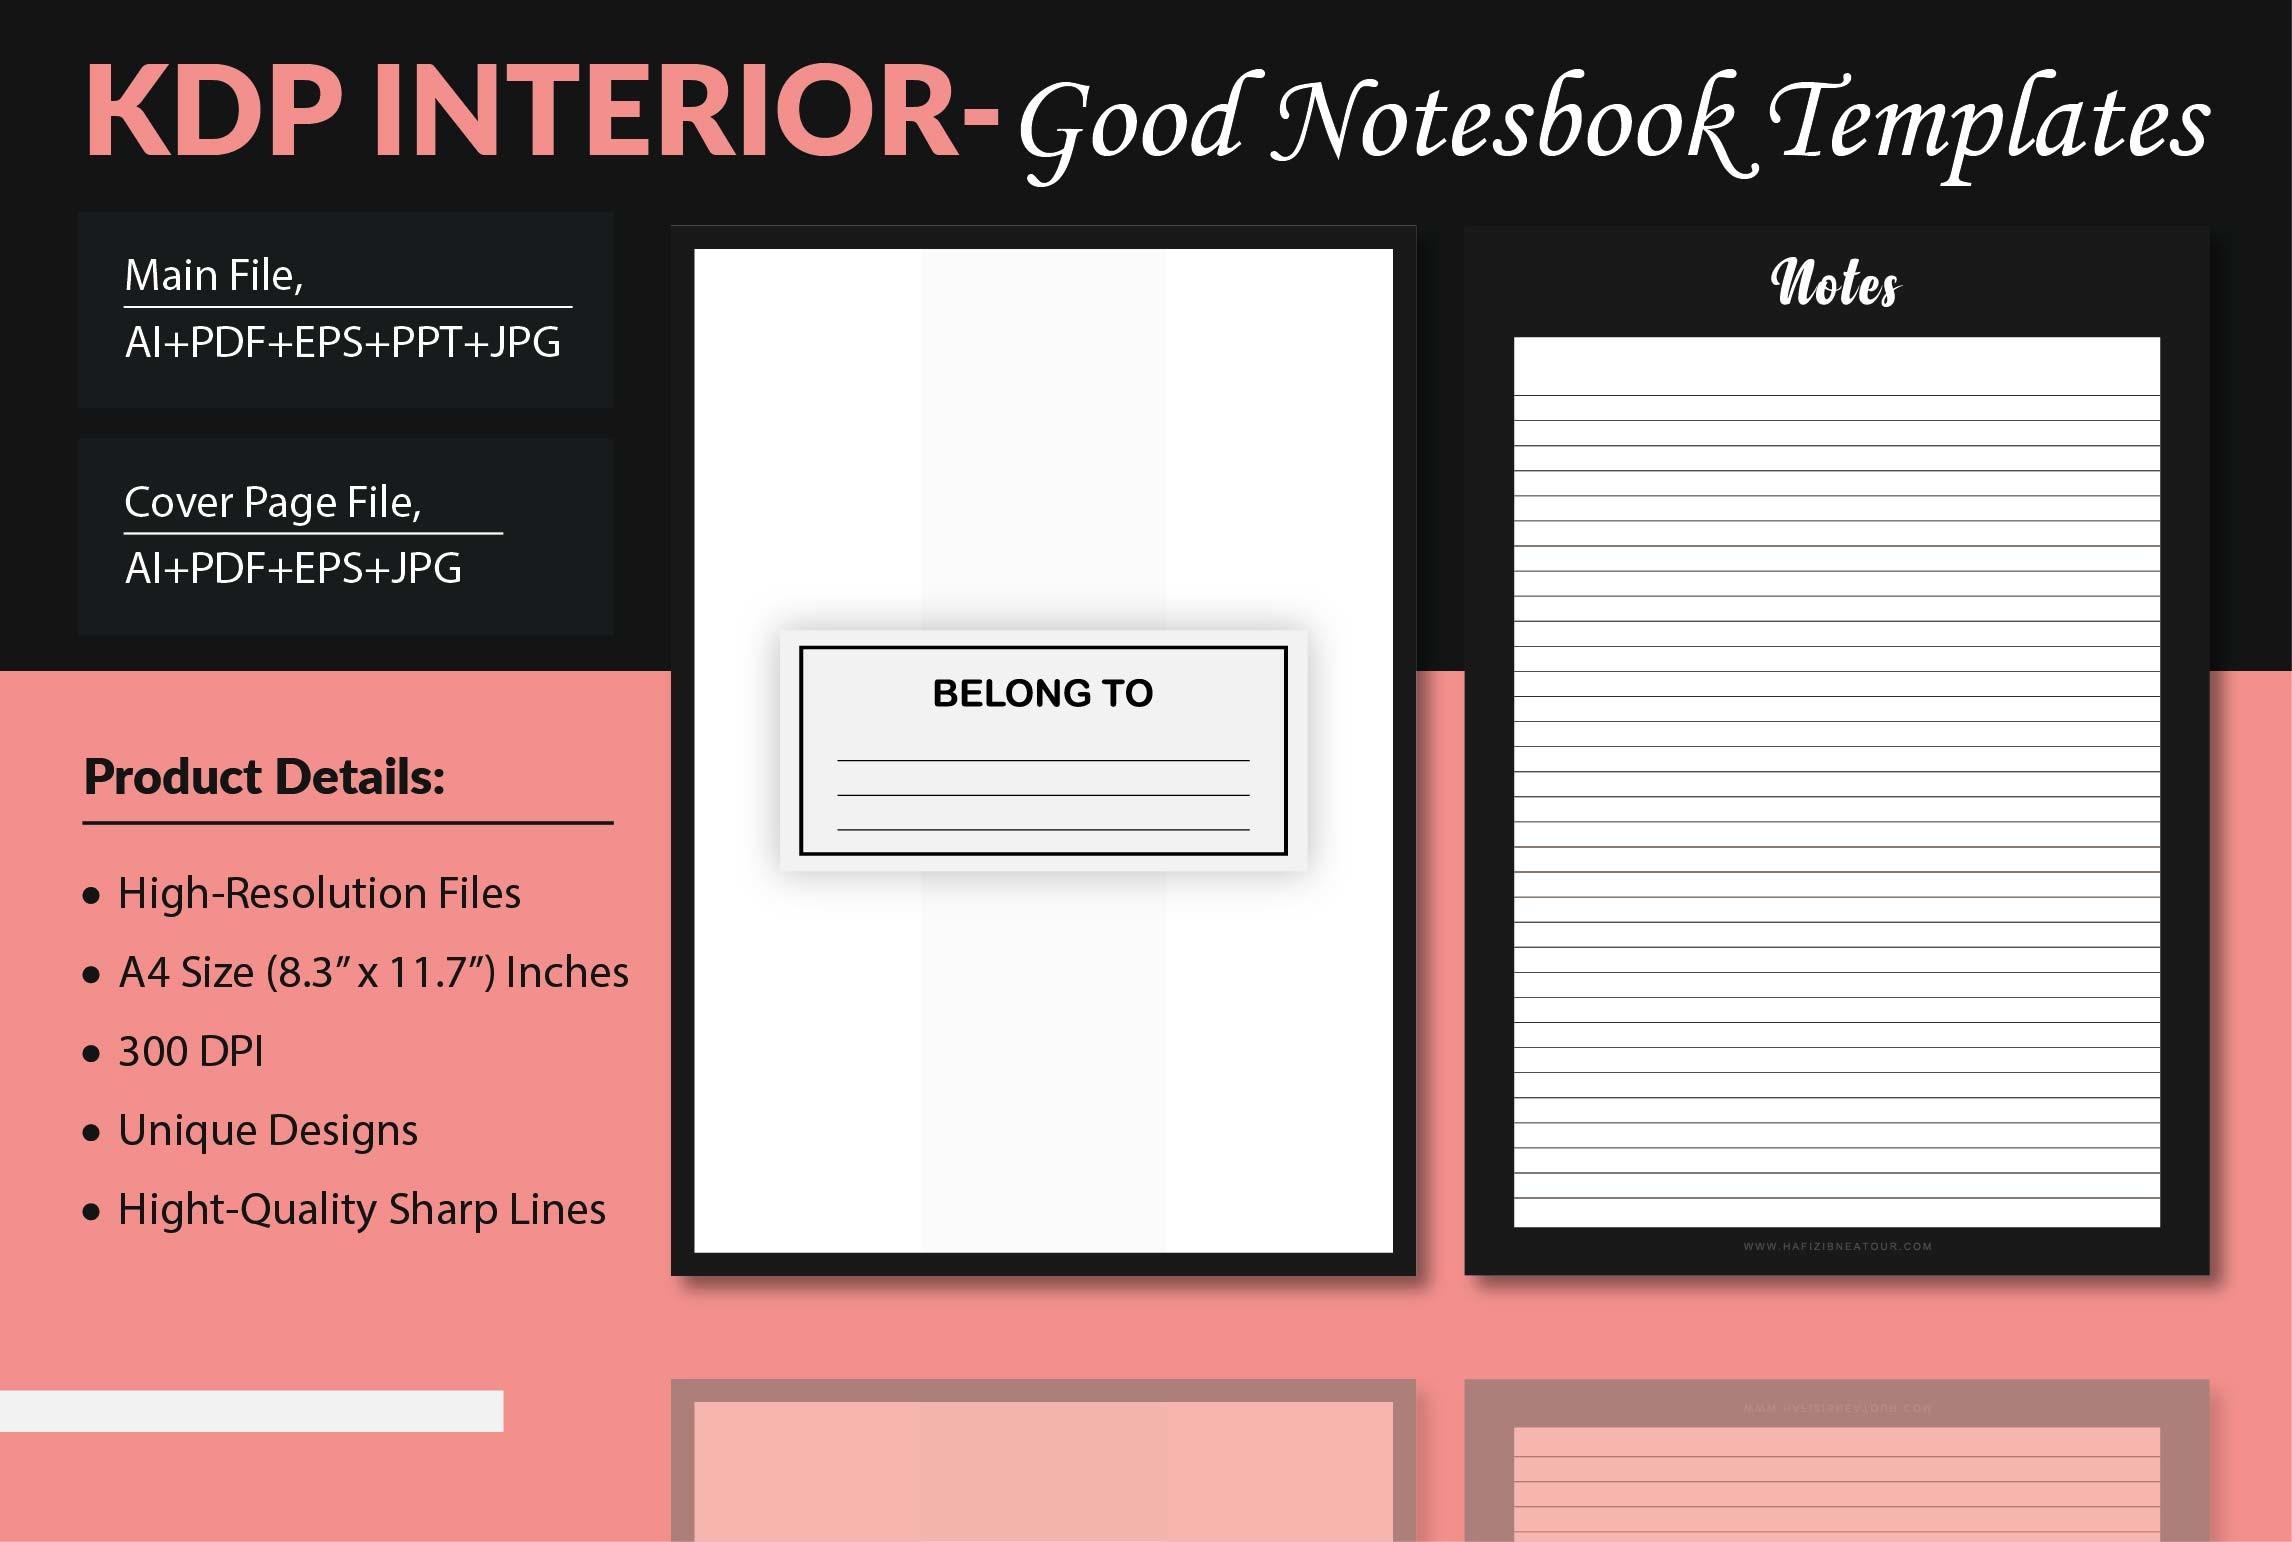 Good Notebook Template - KDP Interior